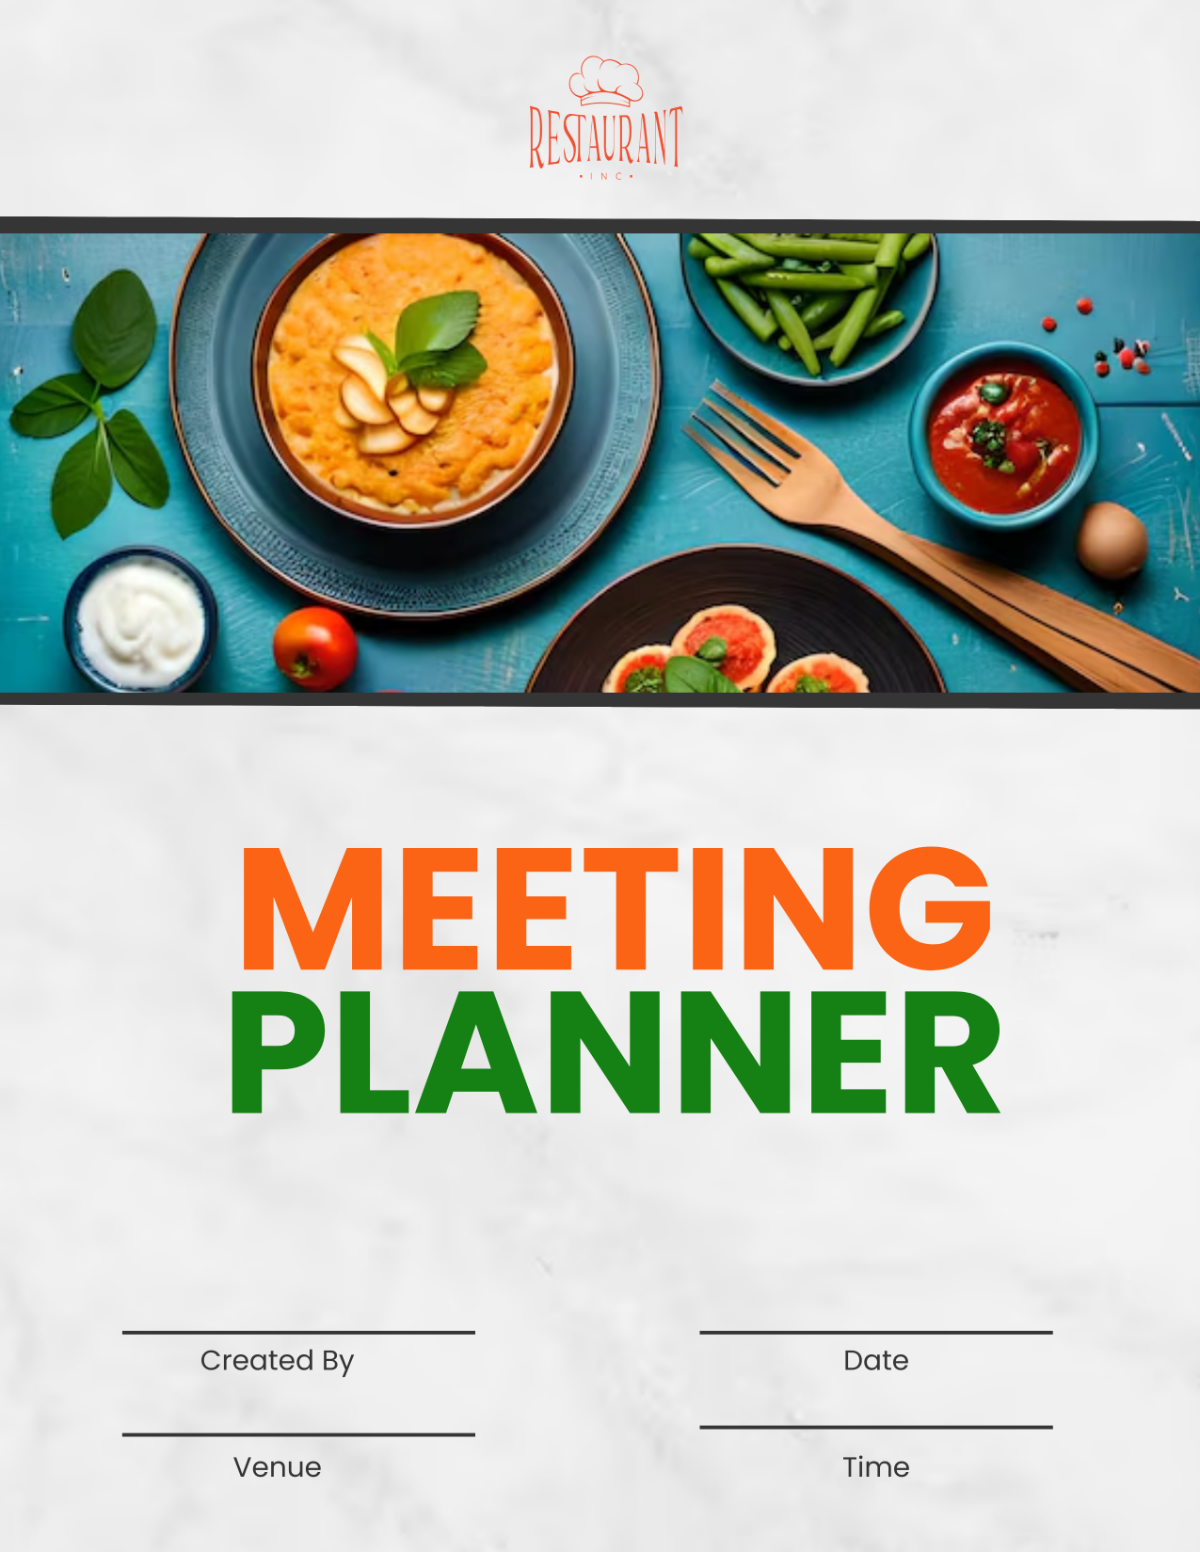 Restaurant Meeting Planner